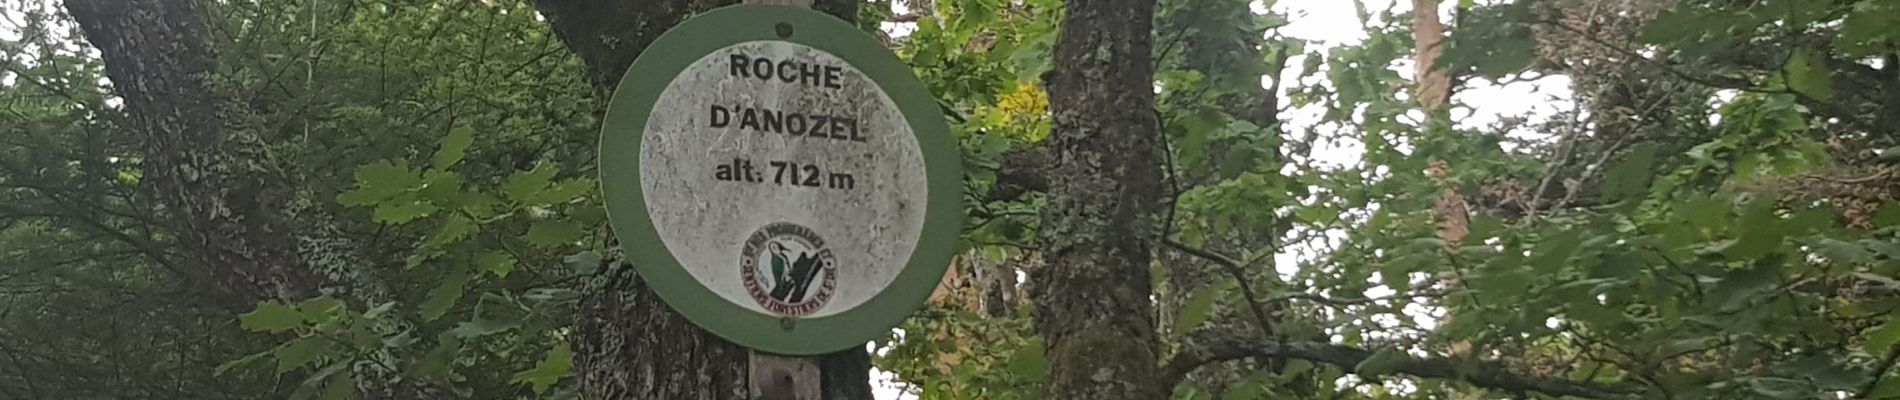 Tocht Trail Taintrux - 2020 08 16  Roche d'Anozel  - Photo